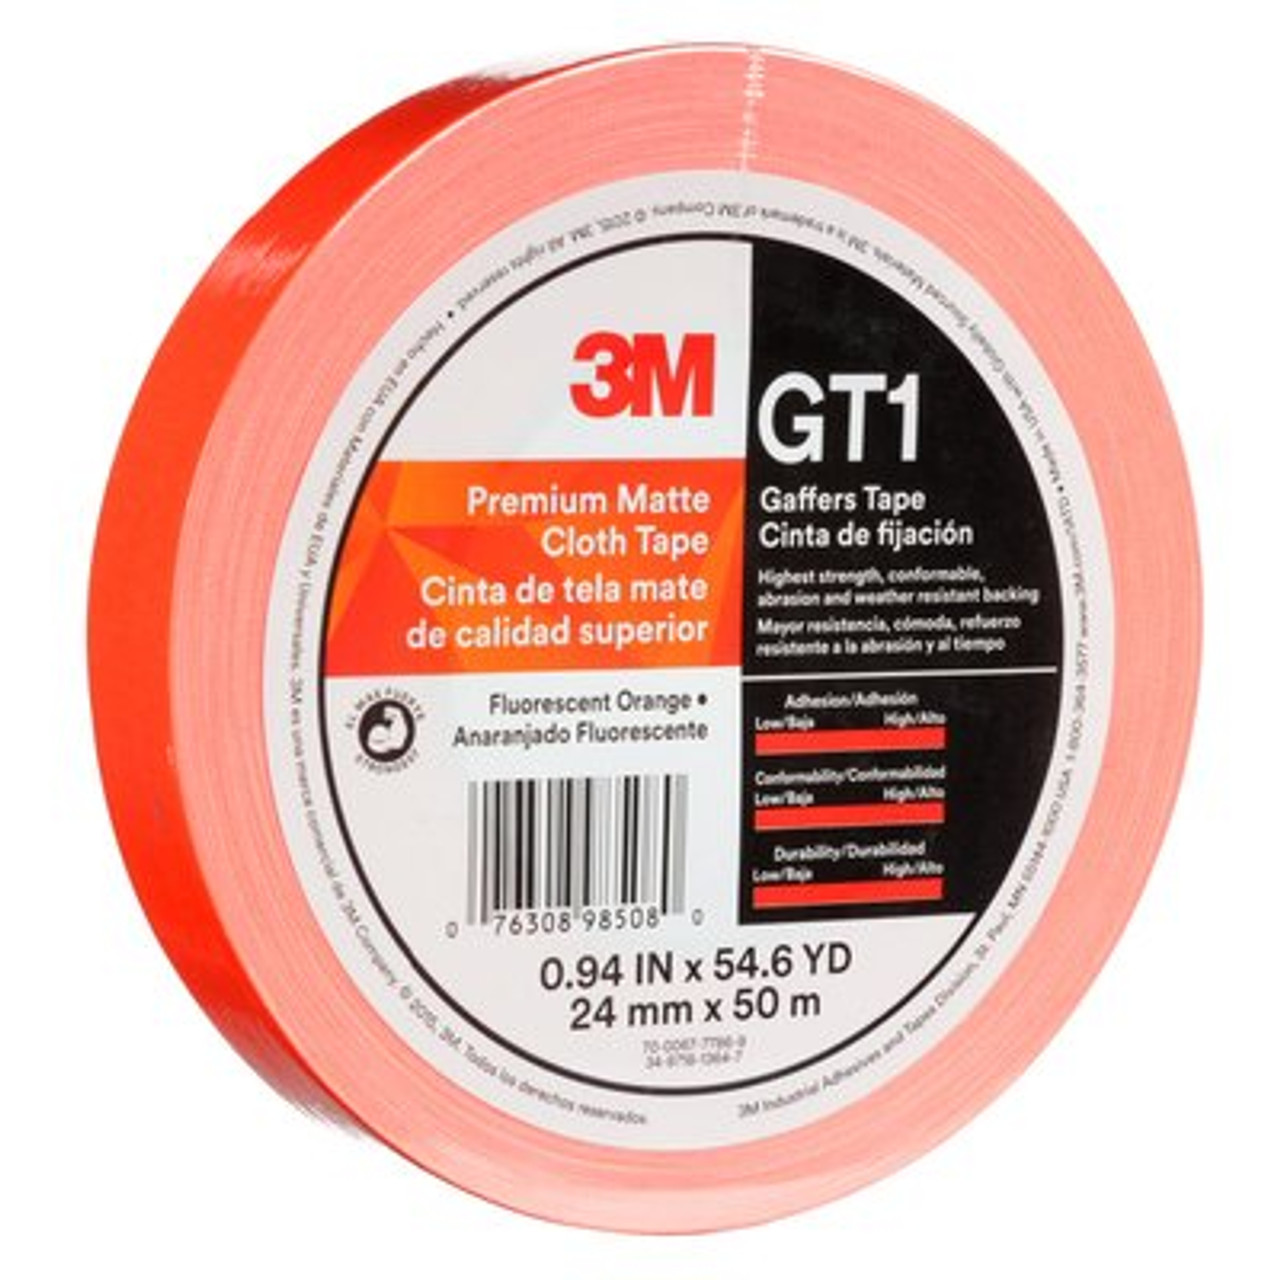 3M™ Premium Matte Cloth (Gaffers) Tape GT1, Fluorescent Orange, 24 mm x 50 m, 11 mil